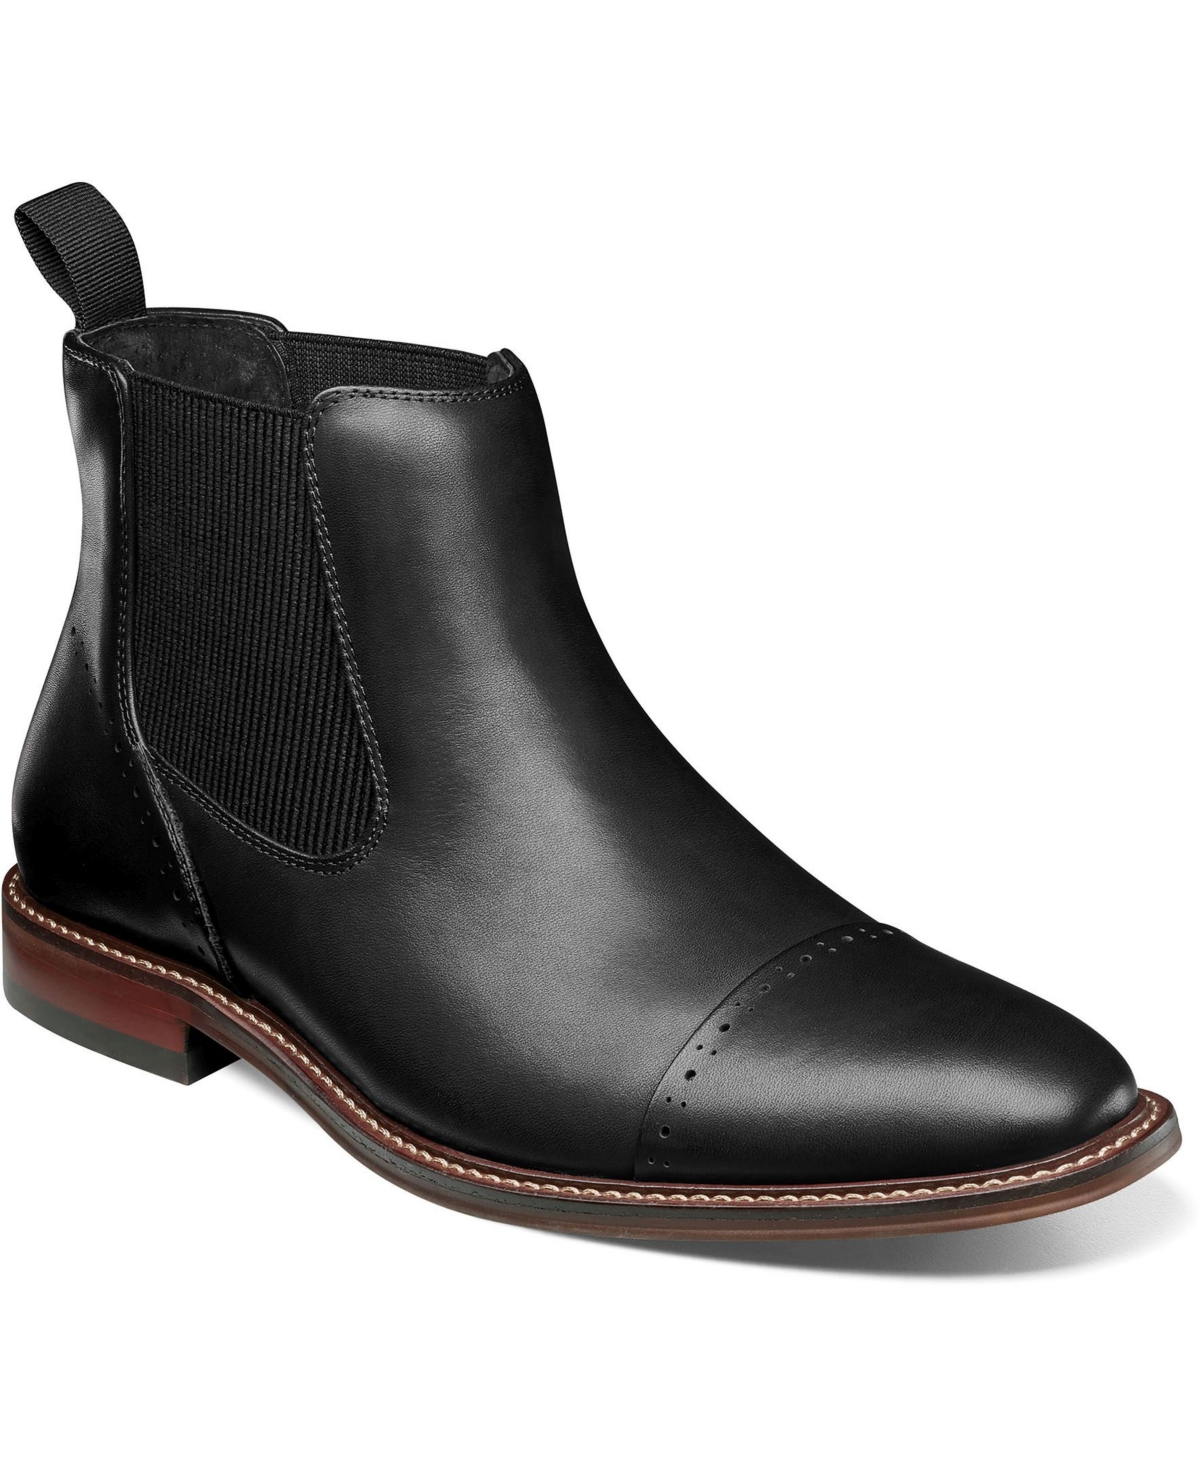 Men's Maury Cap Toe Chelsea Boots - Black